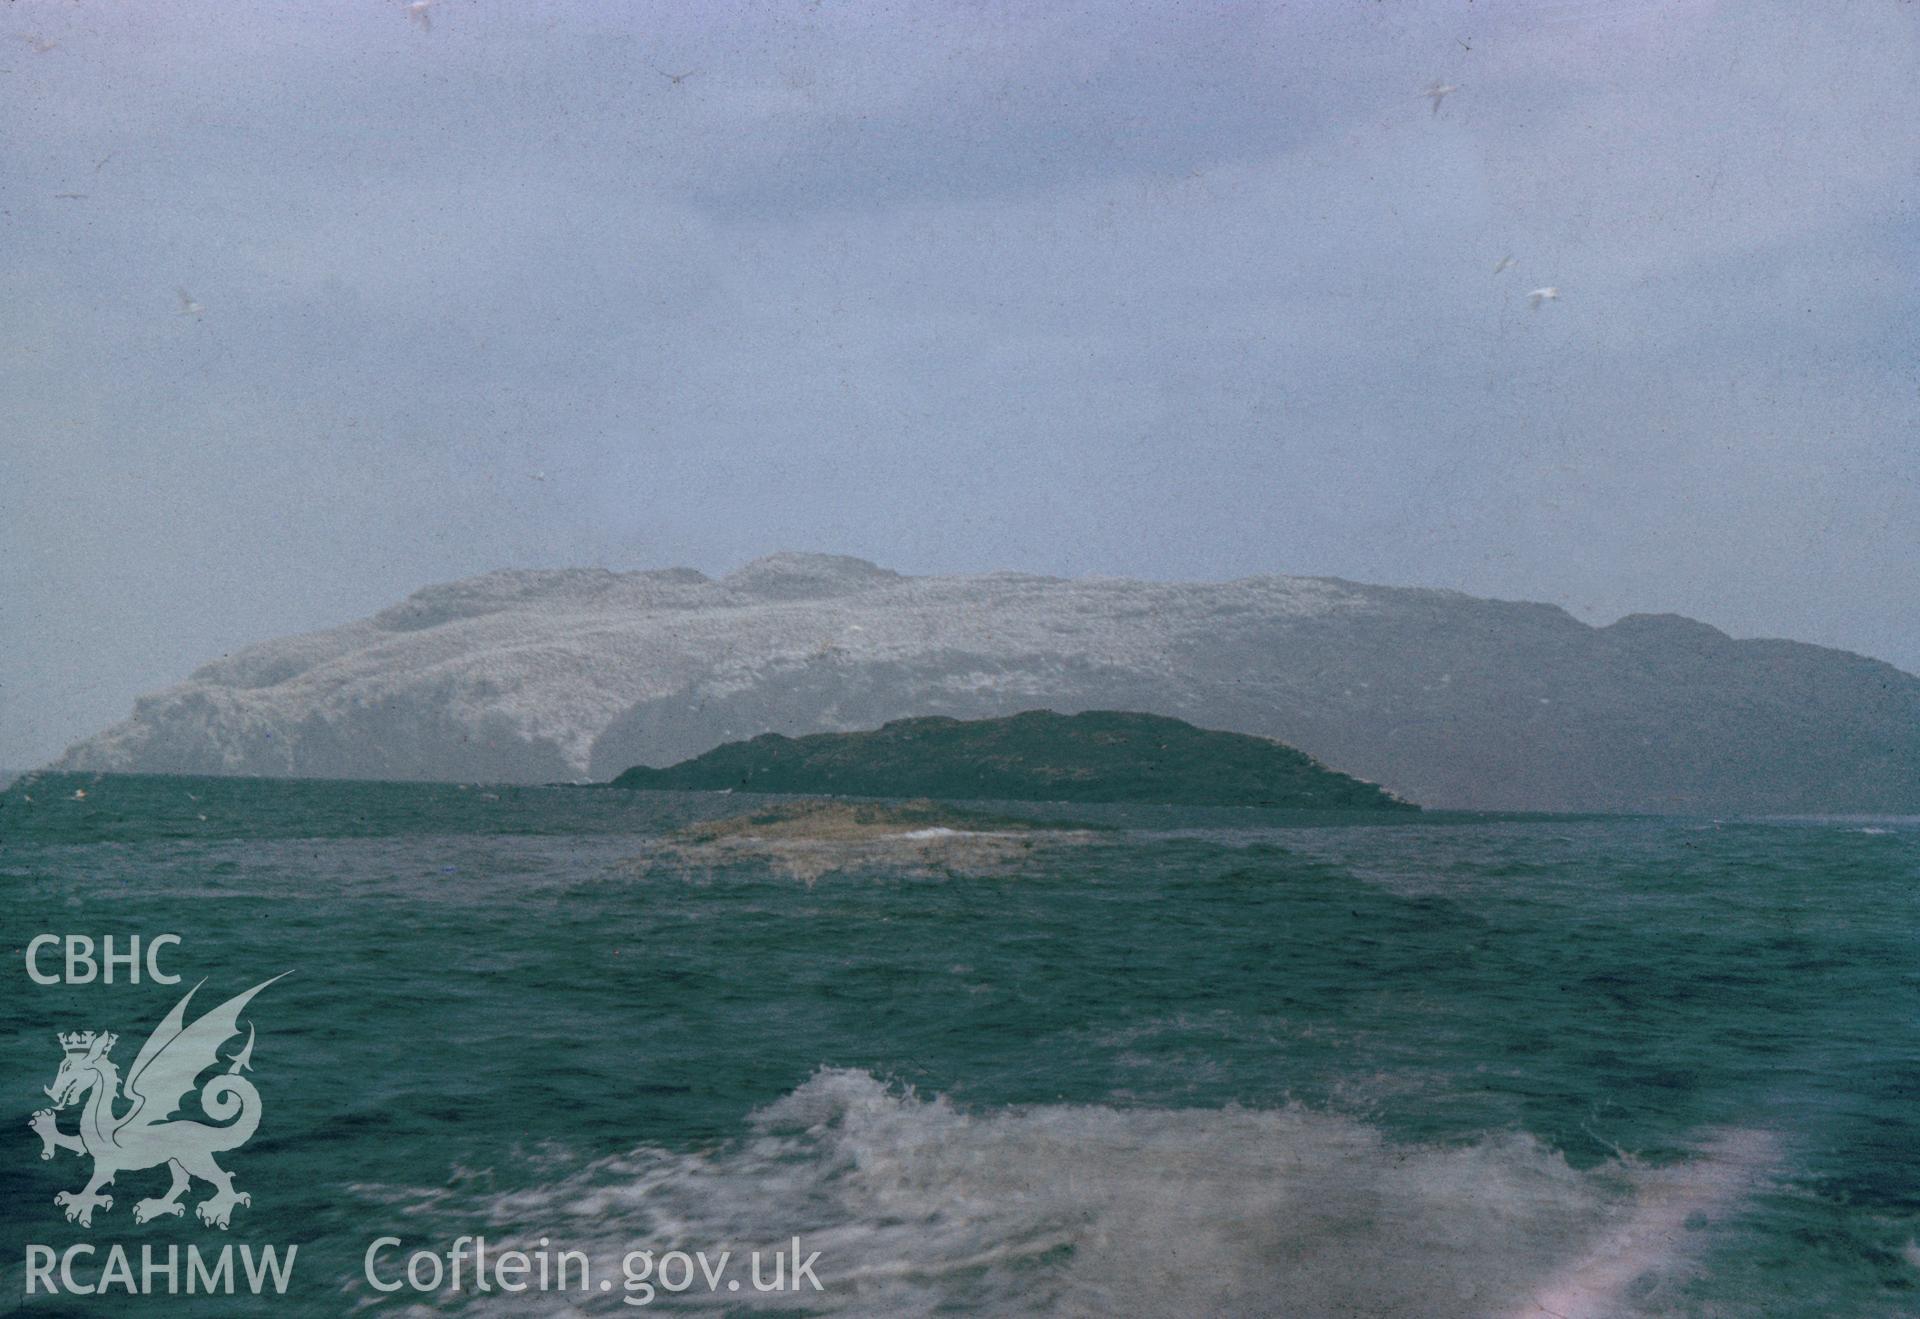 Digital copy of a colour slide showing Grassholm Island, taken by Douglas Hague, August 1972.